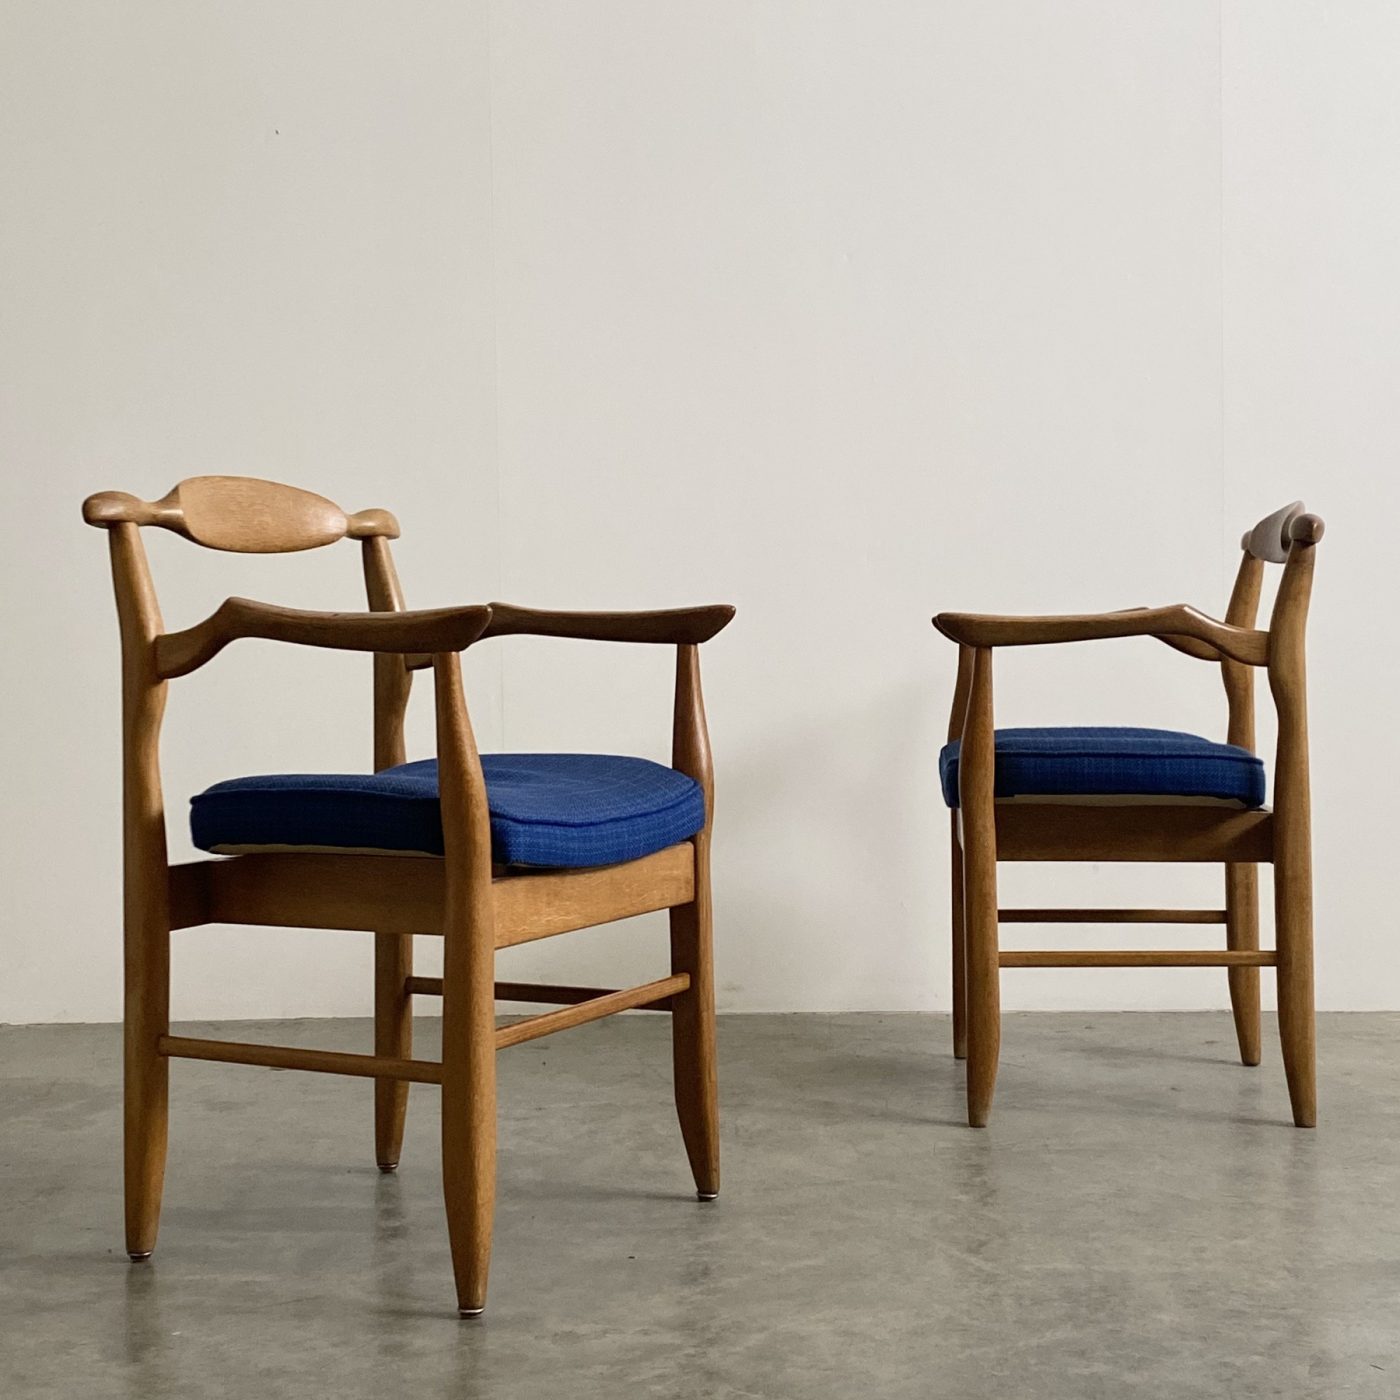 objet-vagabond-midcentury-armchairs0004